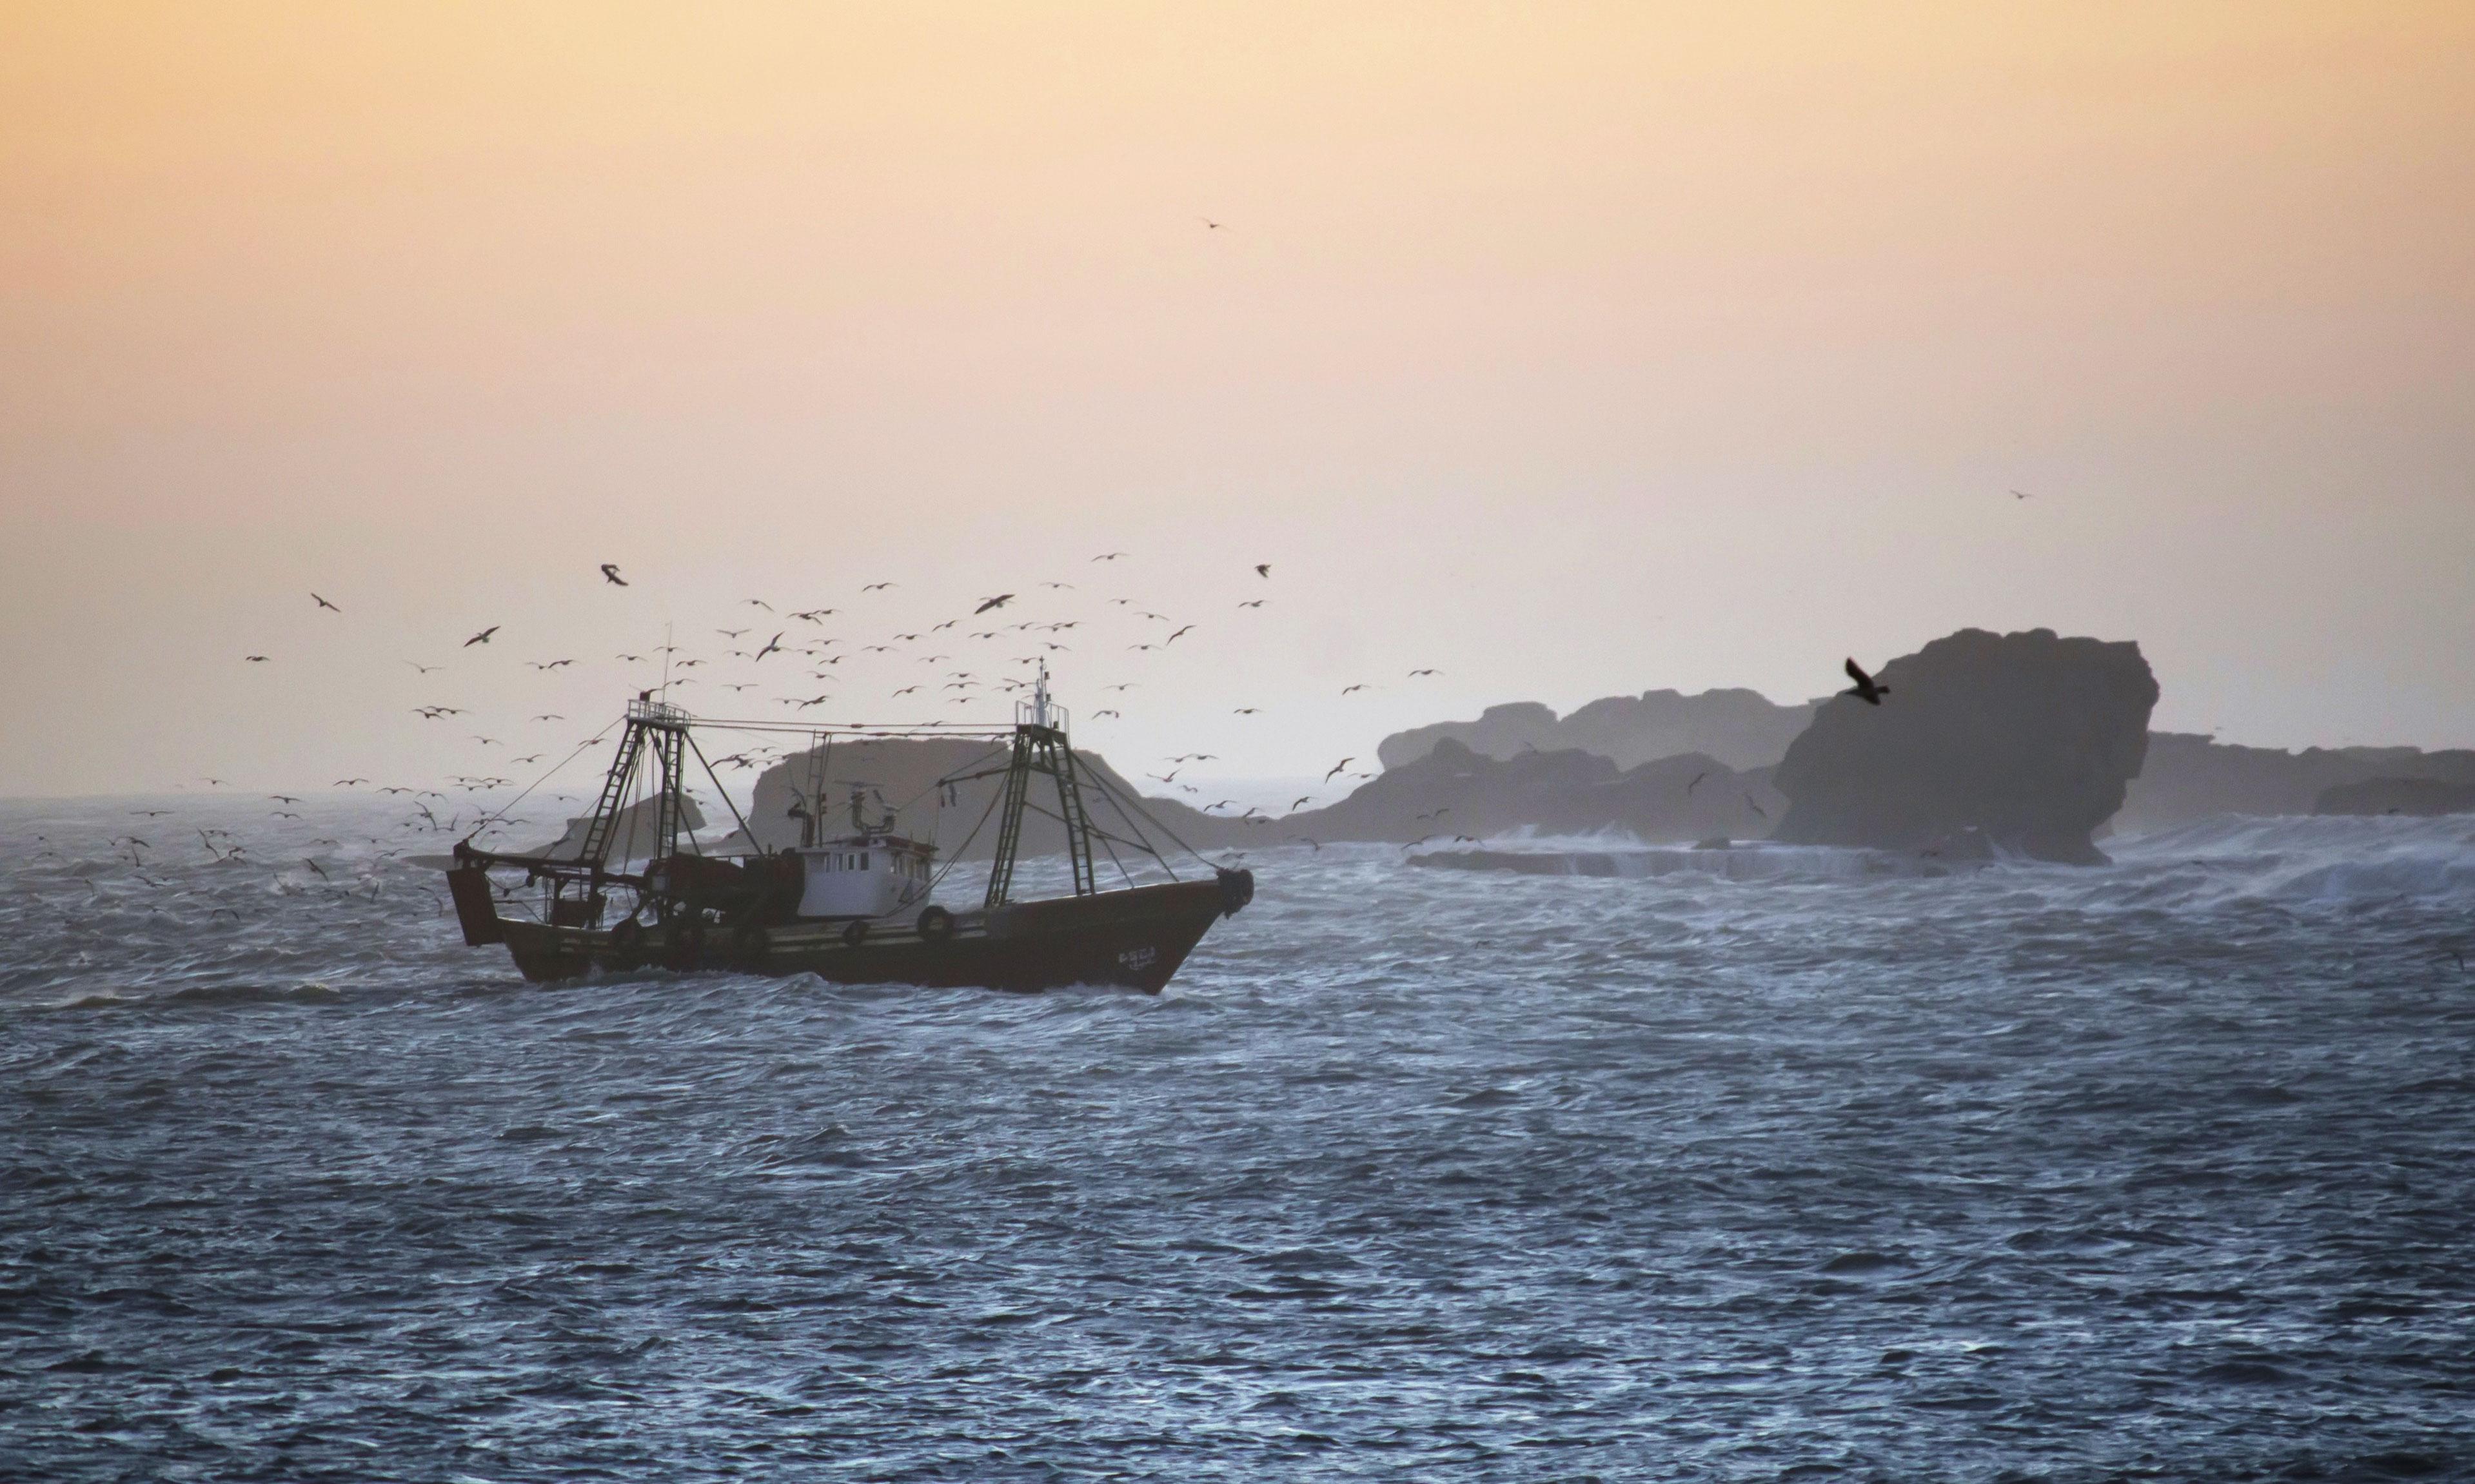 Corruption as a facilitator of illegal fishing